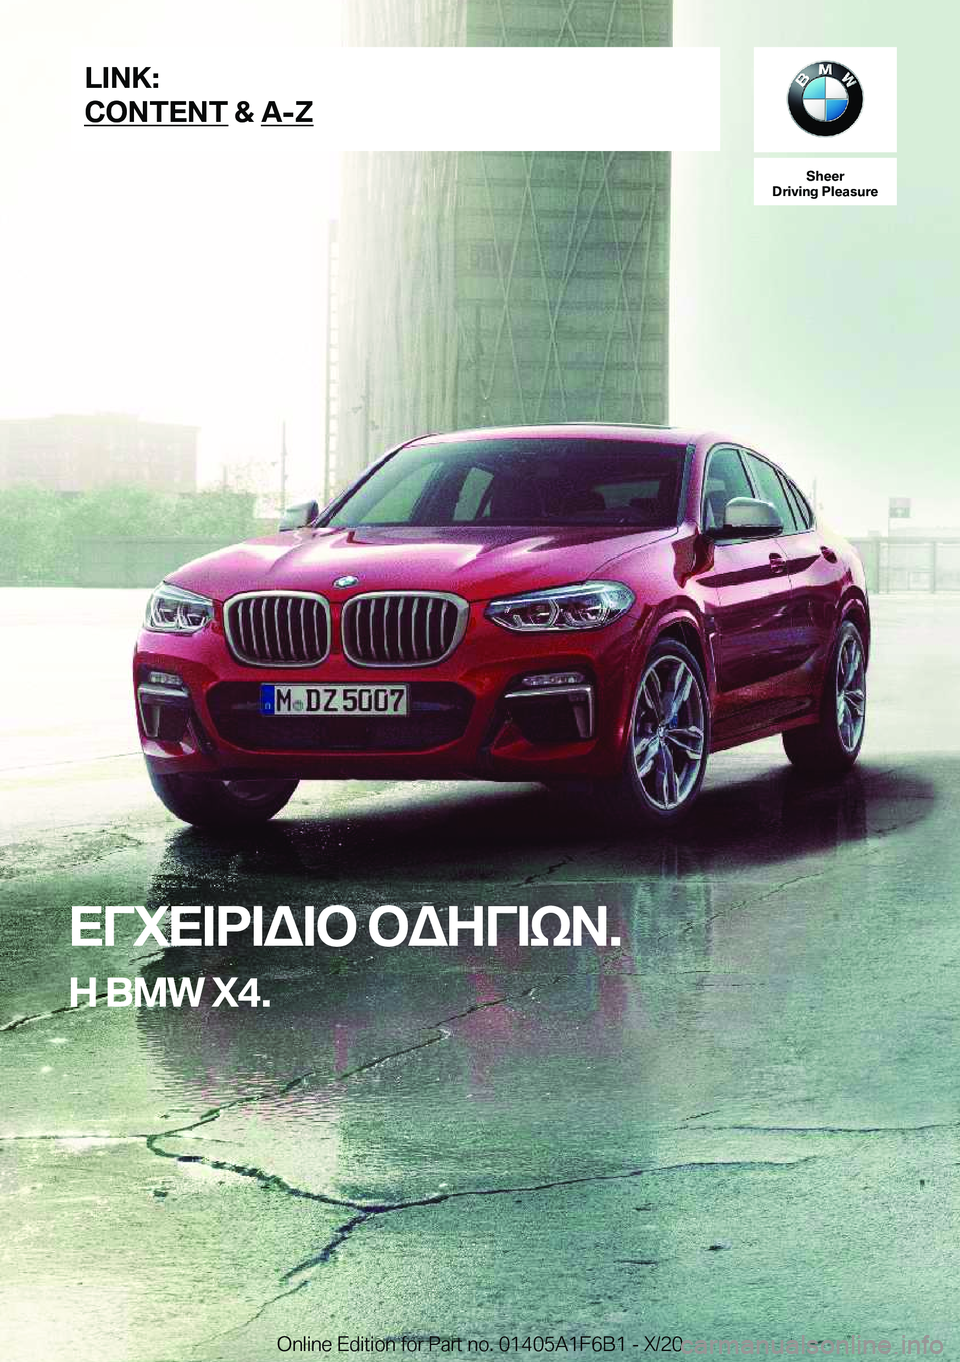 BMW X4 2021  ΟΔΗΓΌΣ ΧΡΉΣΗΣ (in Greek) �S�h�e�e�r
�D�r�i�v�i�n�g��P�l�e�a�s�u�r�e
XViX=d=W=b�bWZV=kA�.
Z��B�M�W��X�4�.�L�I�N�K�:
�C�O�N�T�E�N�T��&��A�-�Z�O�n�l�i�n�e��E�d�i�t�i�o�n��f�o�r��P�a�r�t��n�o�.��0�1�4